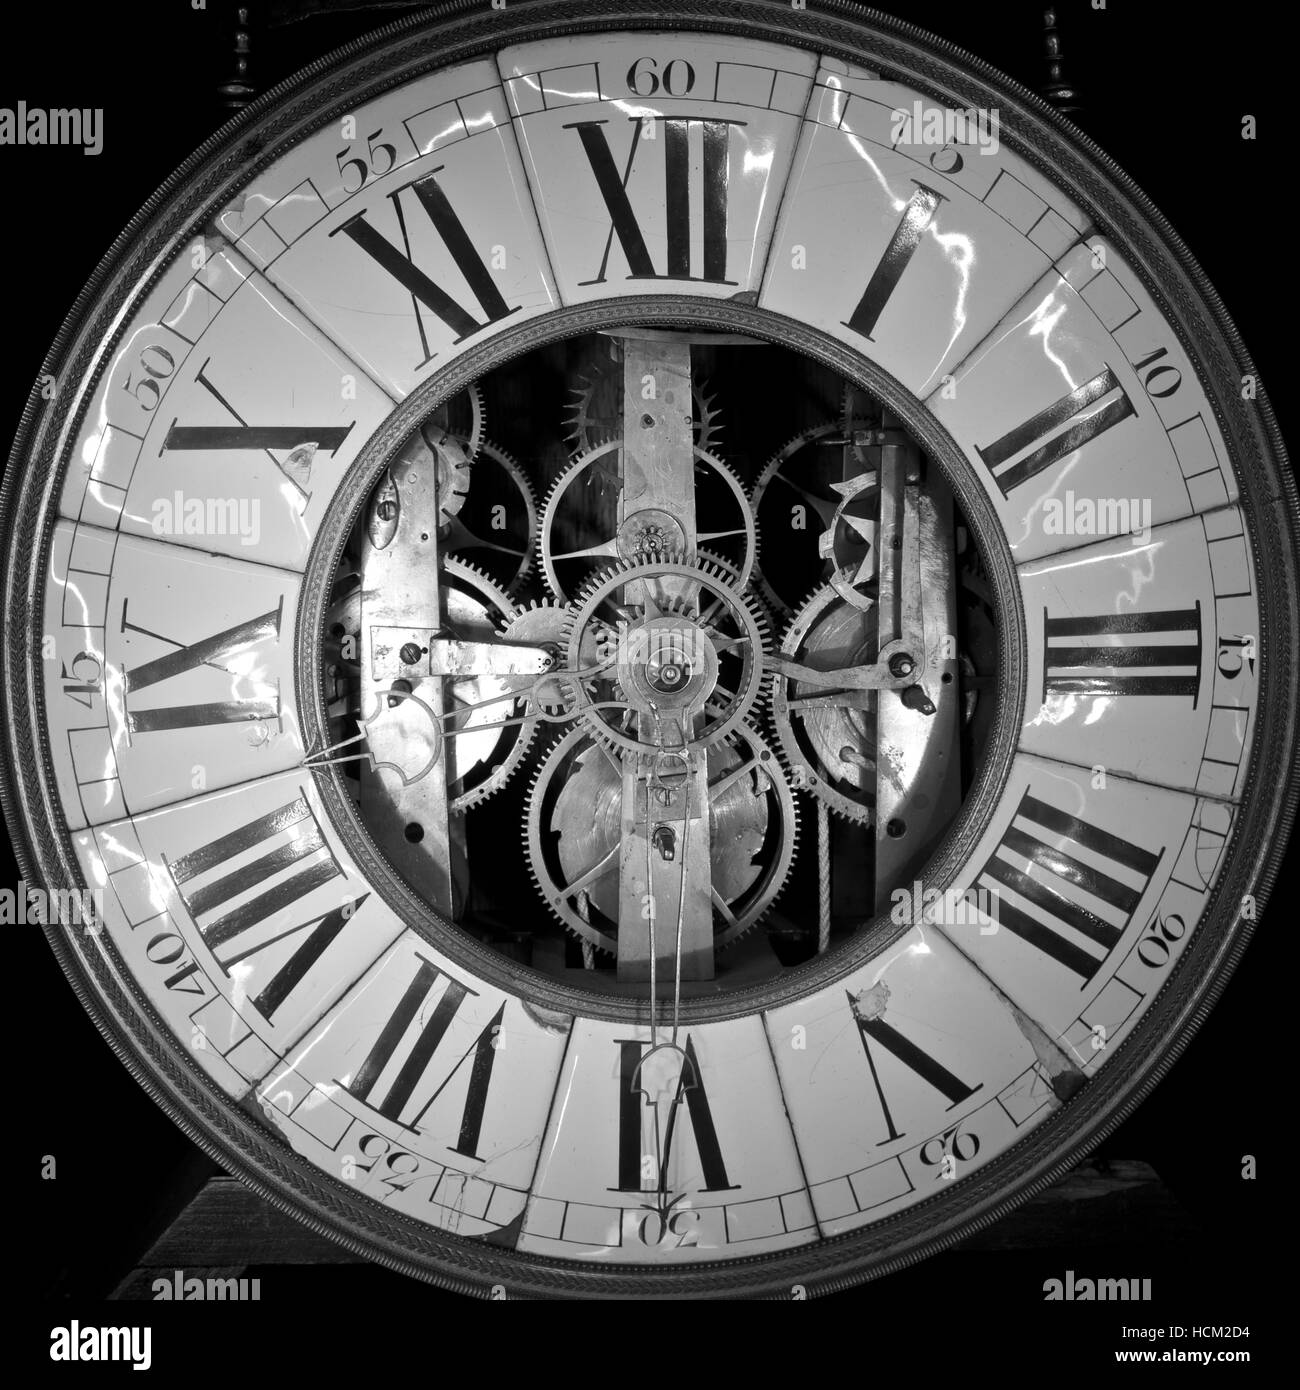 Skeleton grandfather clock face Stock Photo: 128289424 - Alamy
